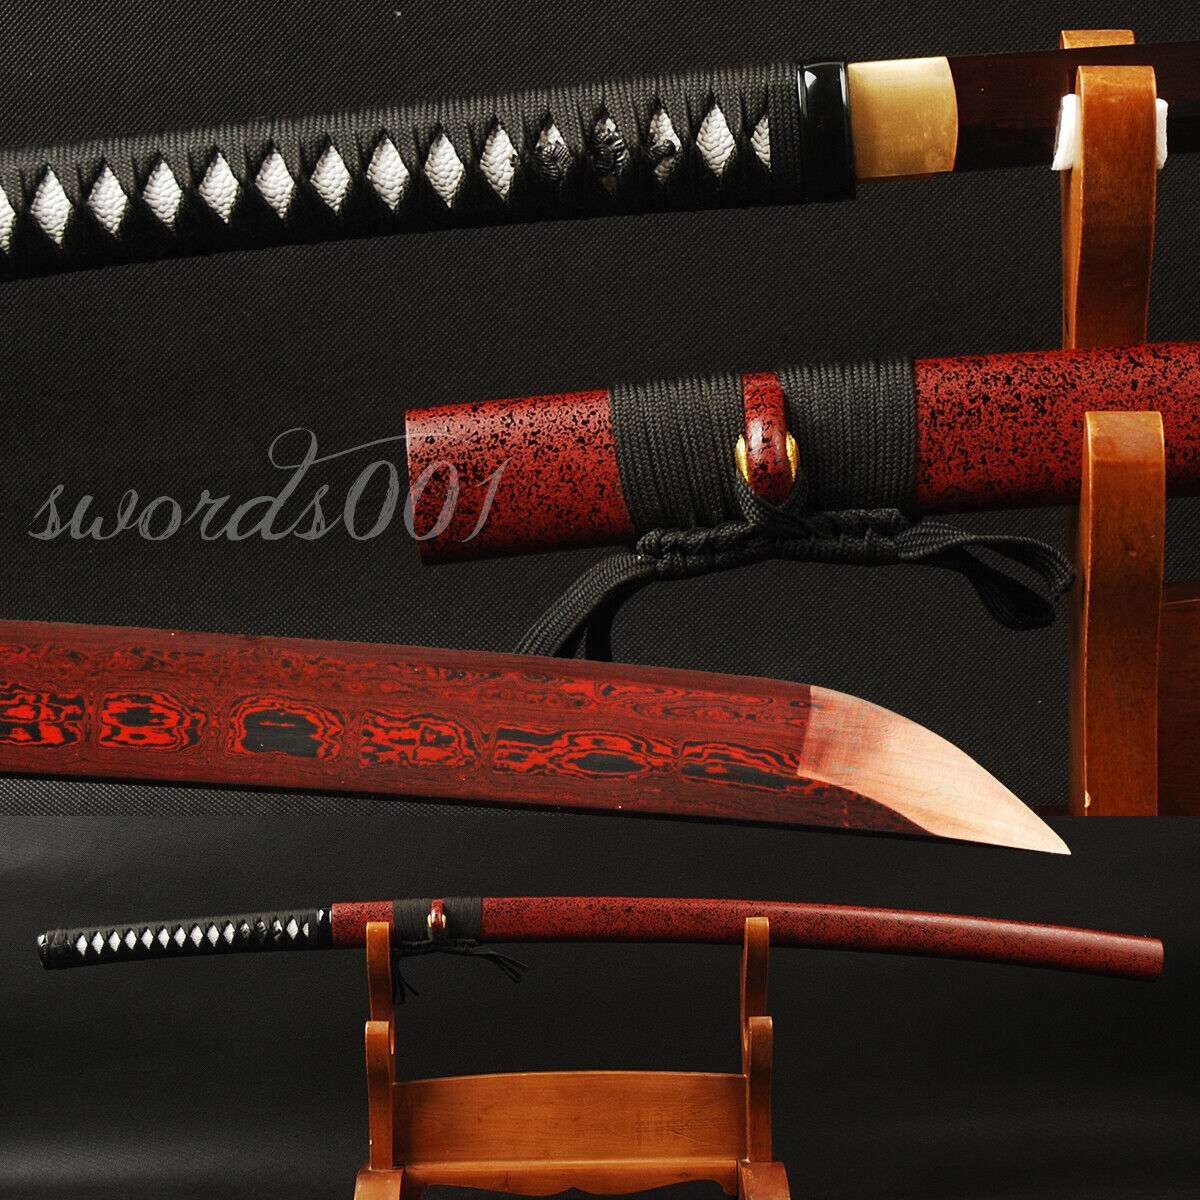 Hand-forged damascus steel Red Blade Japanese Samurai Katana Full Tang Sharp